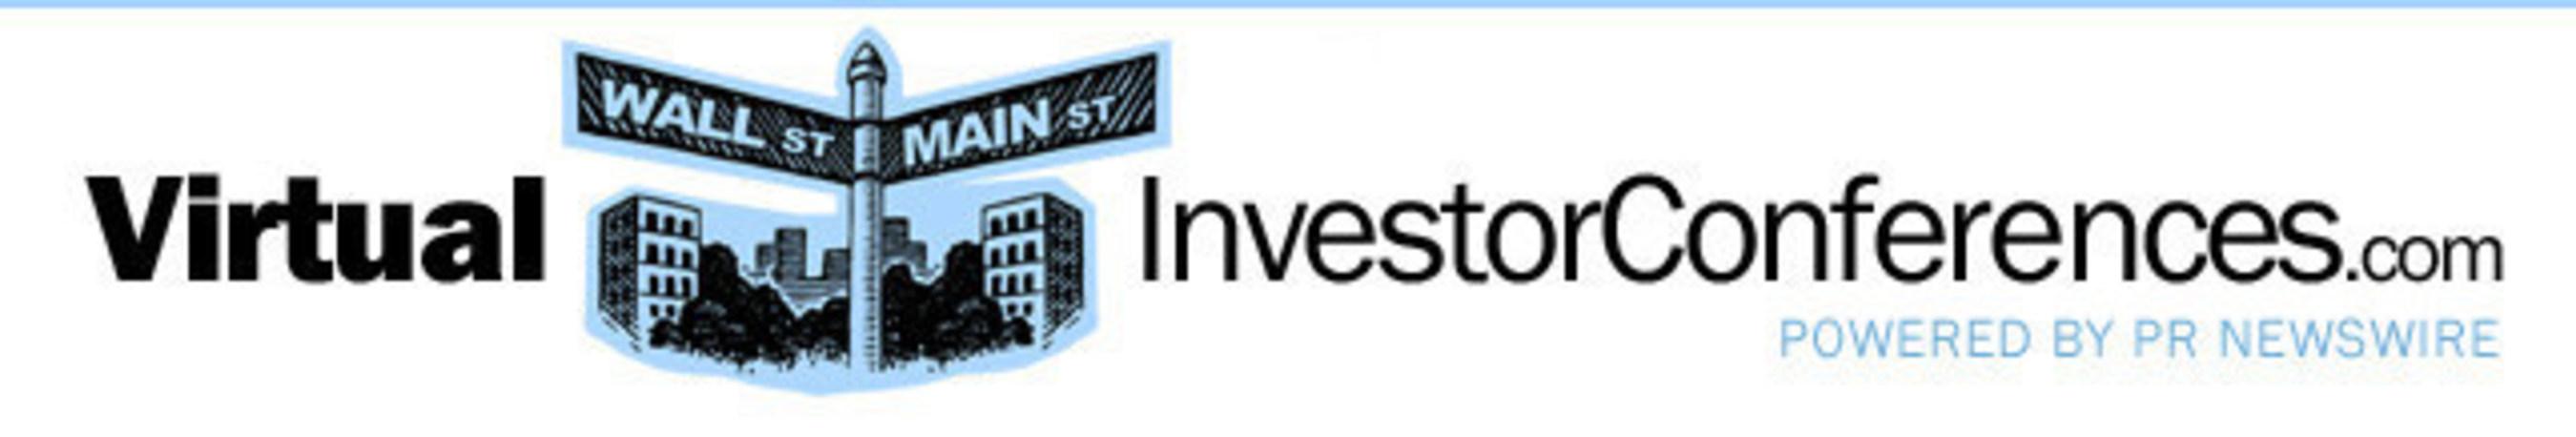 MJLink.com, Inc. to Webcast, Live, at VirtualInvestorConferences.com December 6th.